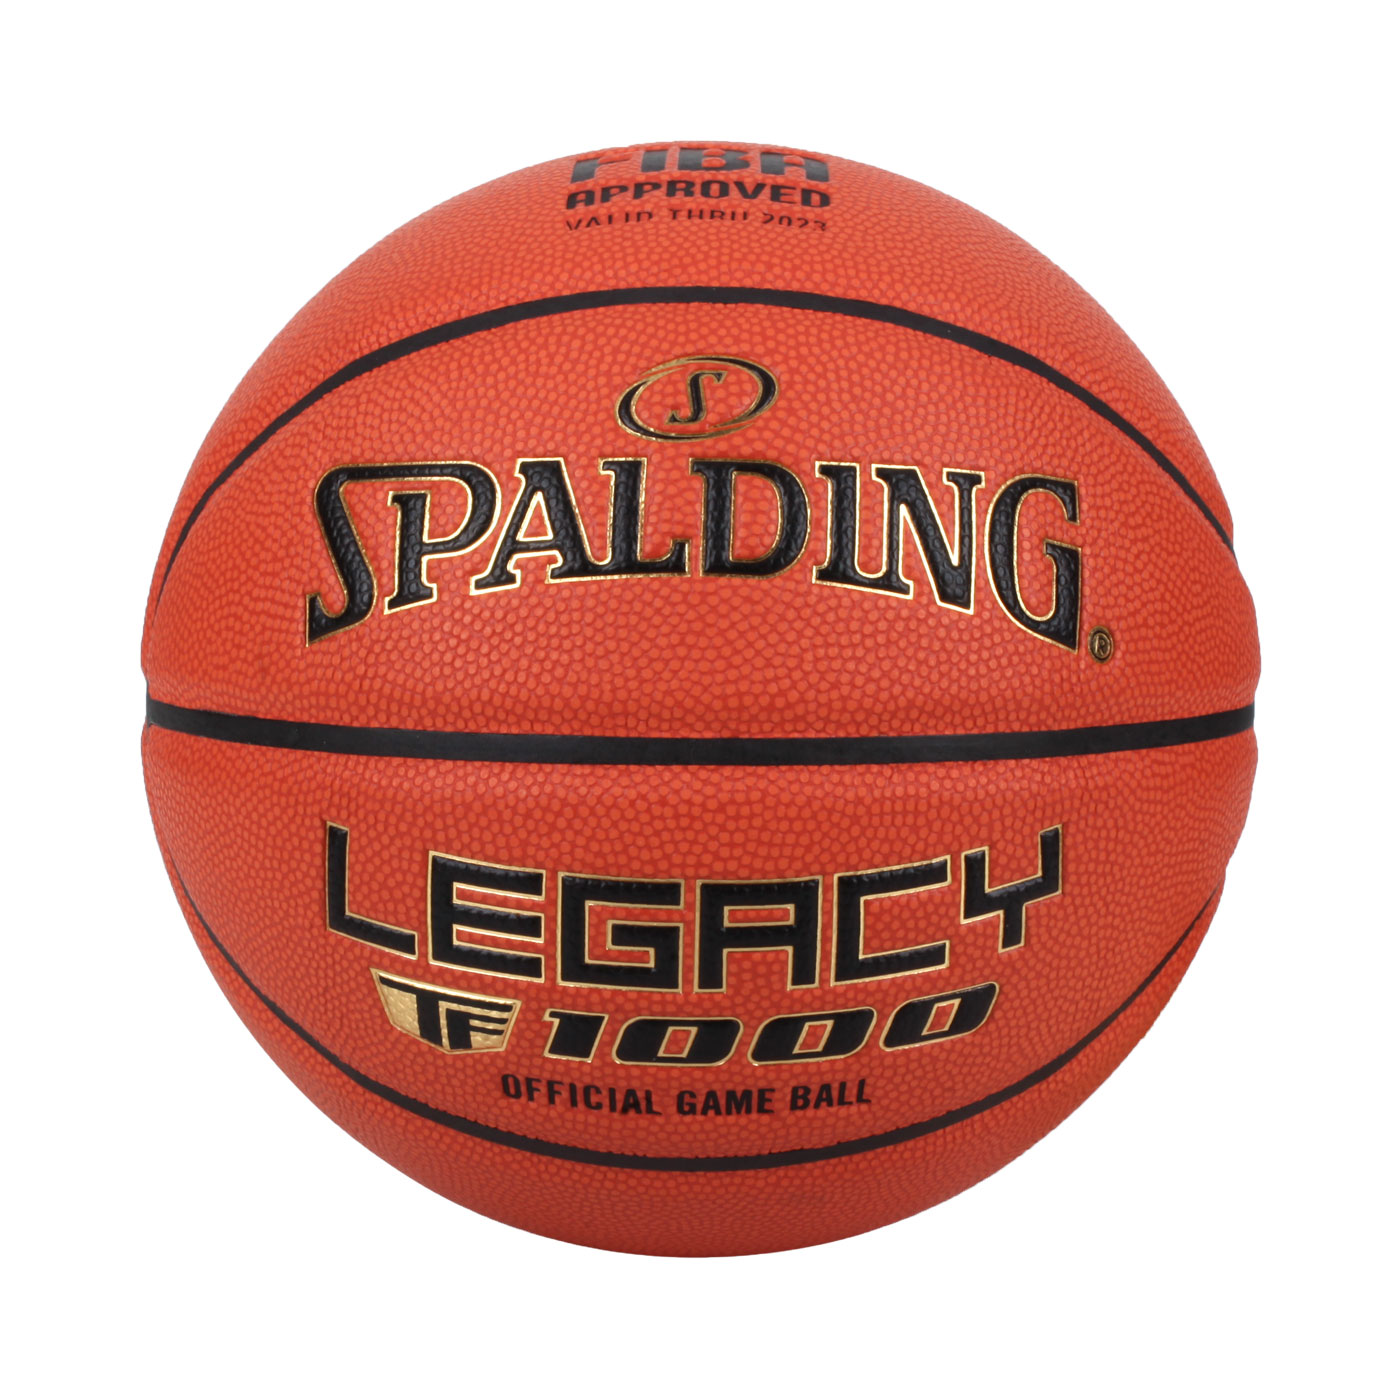 SPALDING TF-1000 Legacy #6合成皮籃球#40691 SPA76964 - 橘